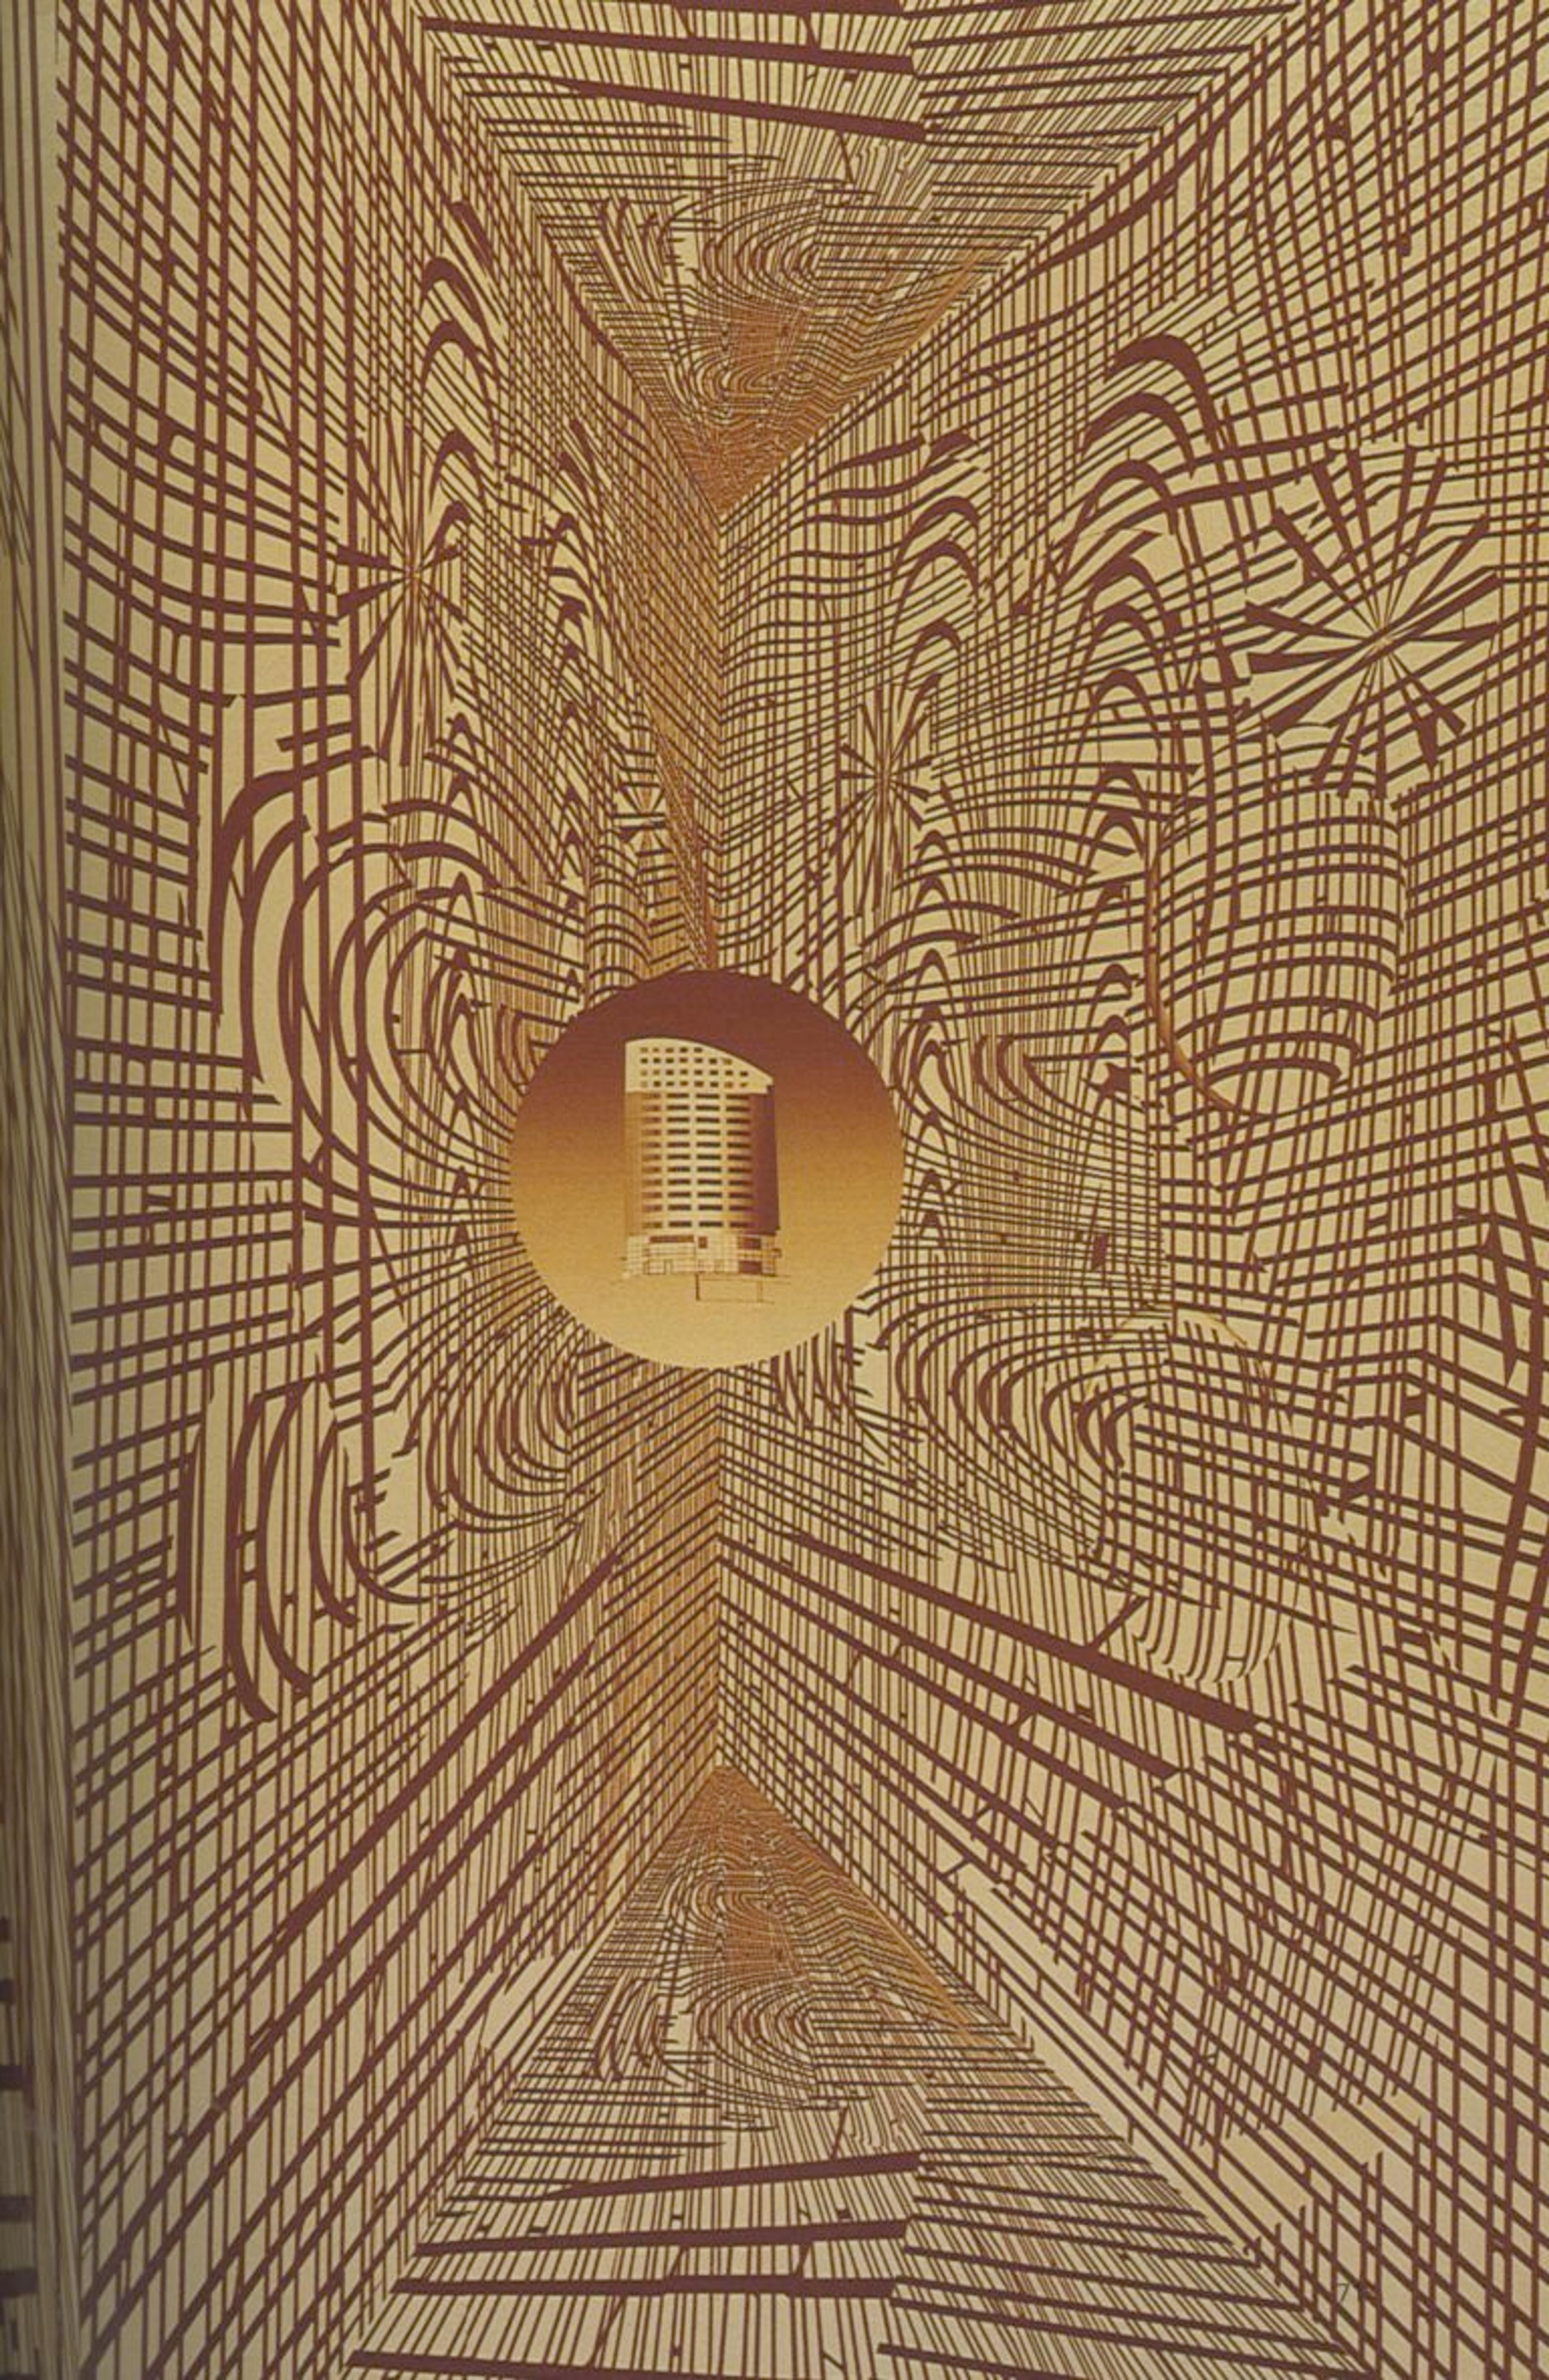 (2006) Eleni Christodoulou, Polvo, 2006, digital print on wallpaper material, dimensions variable